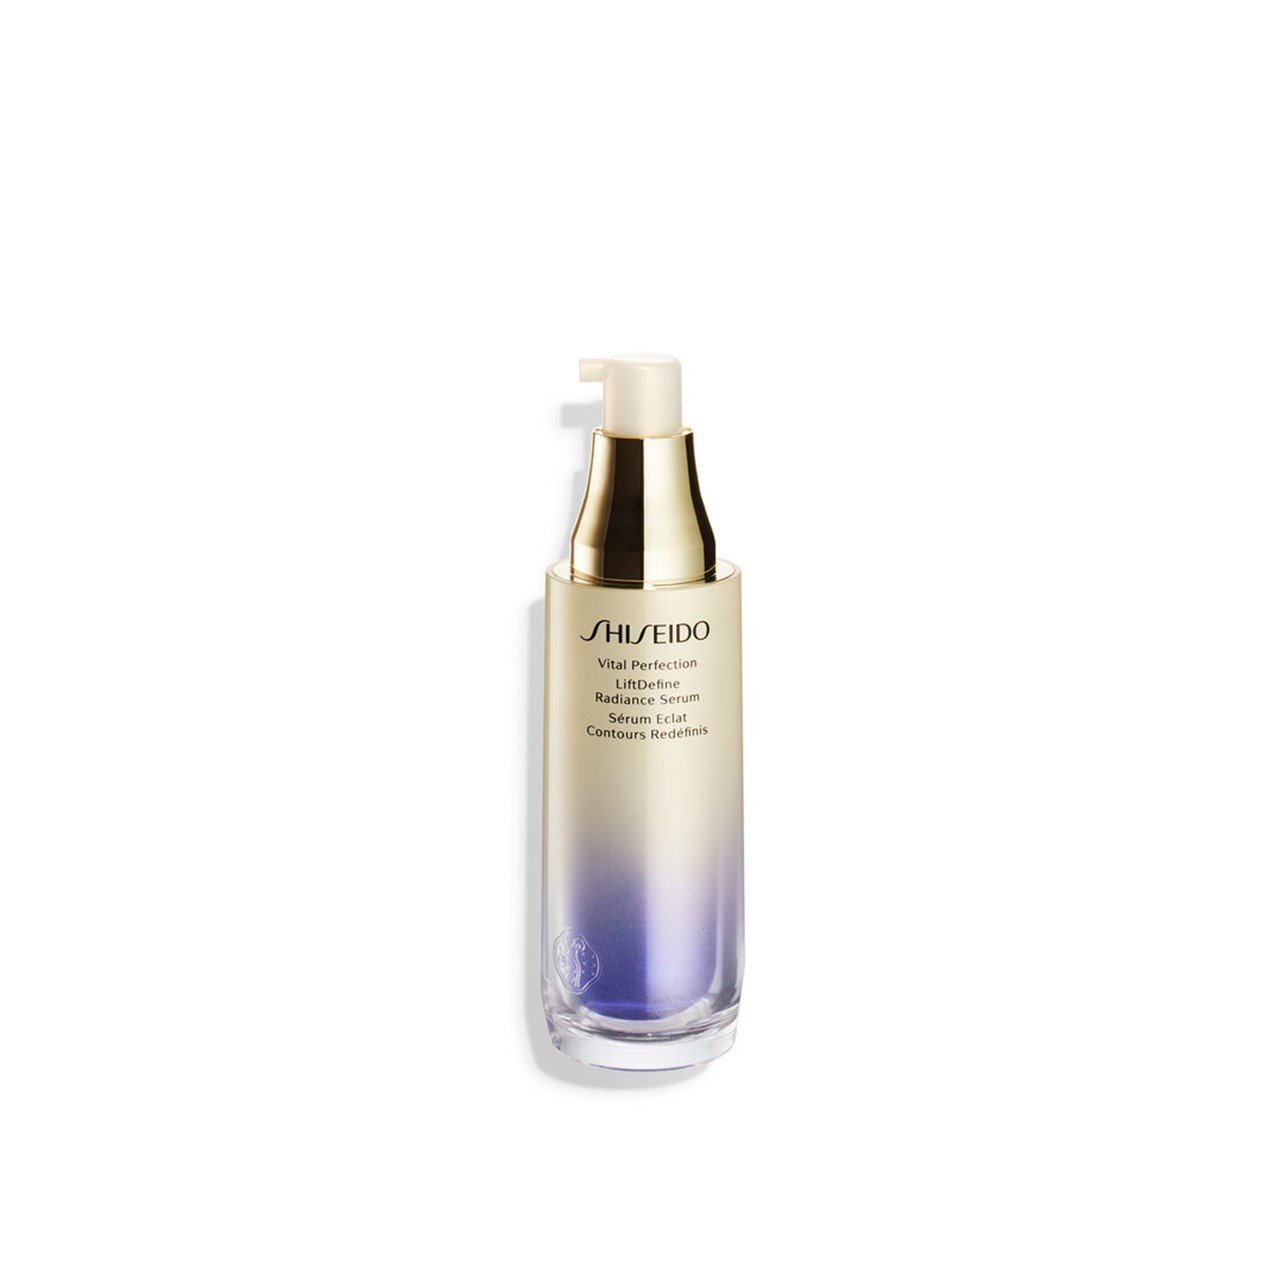 Shiseido Vital Perfection LiftDefine Radiance Serum 40ml (1.35fl oz)